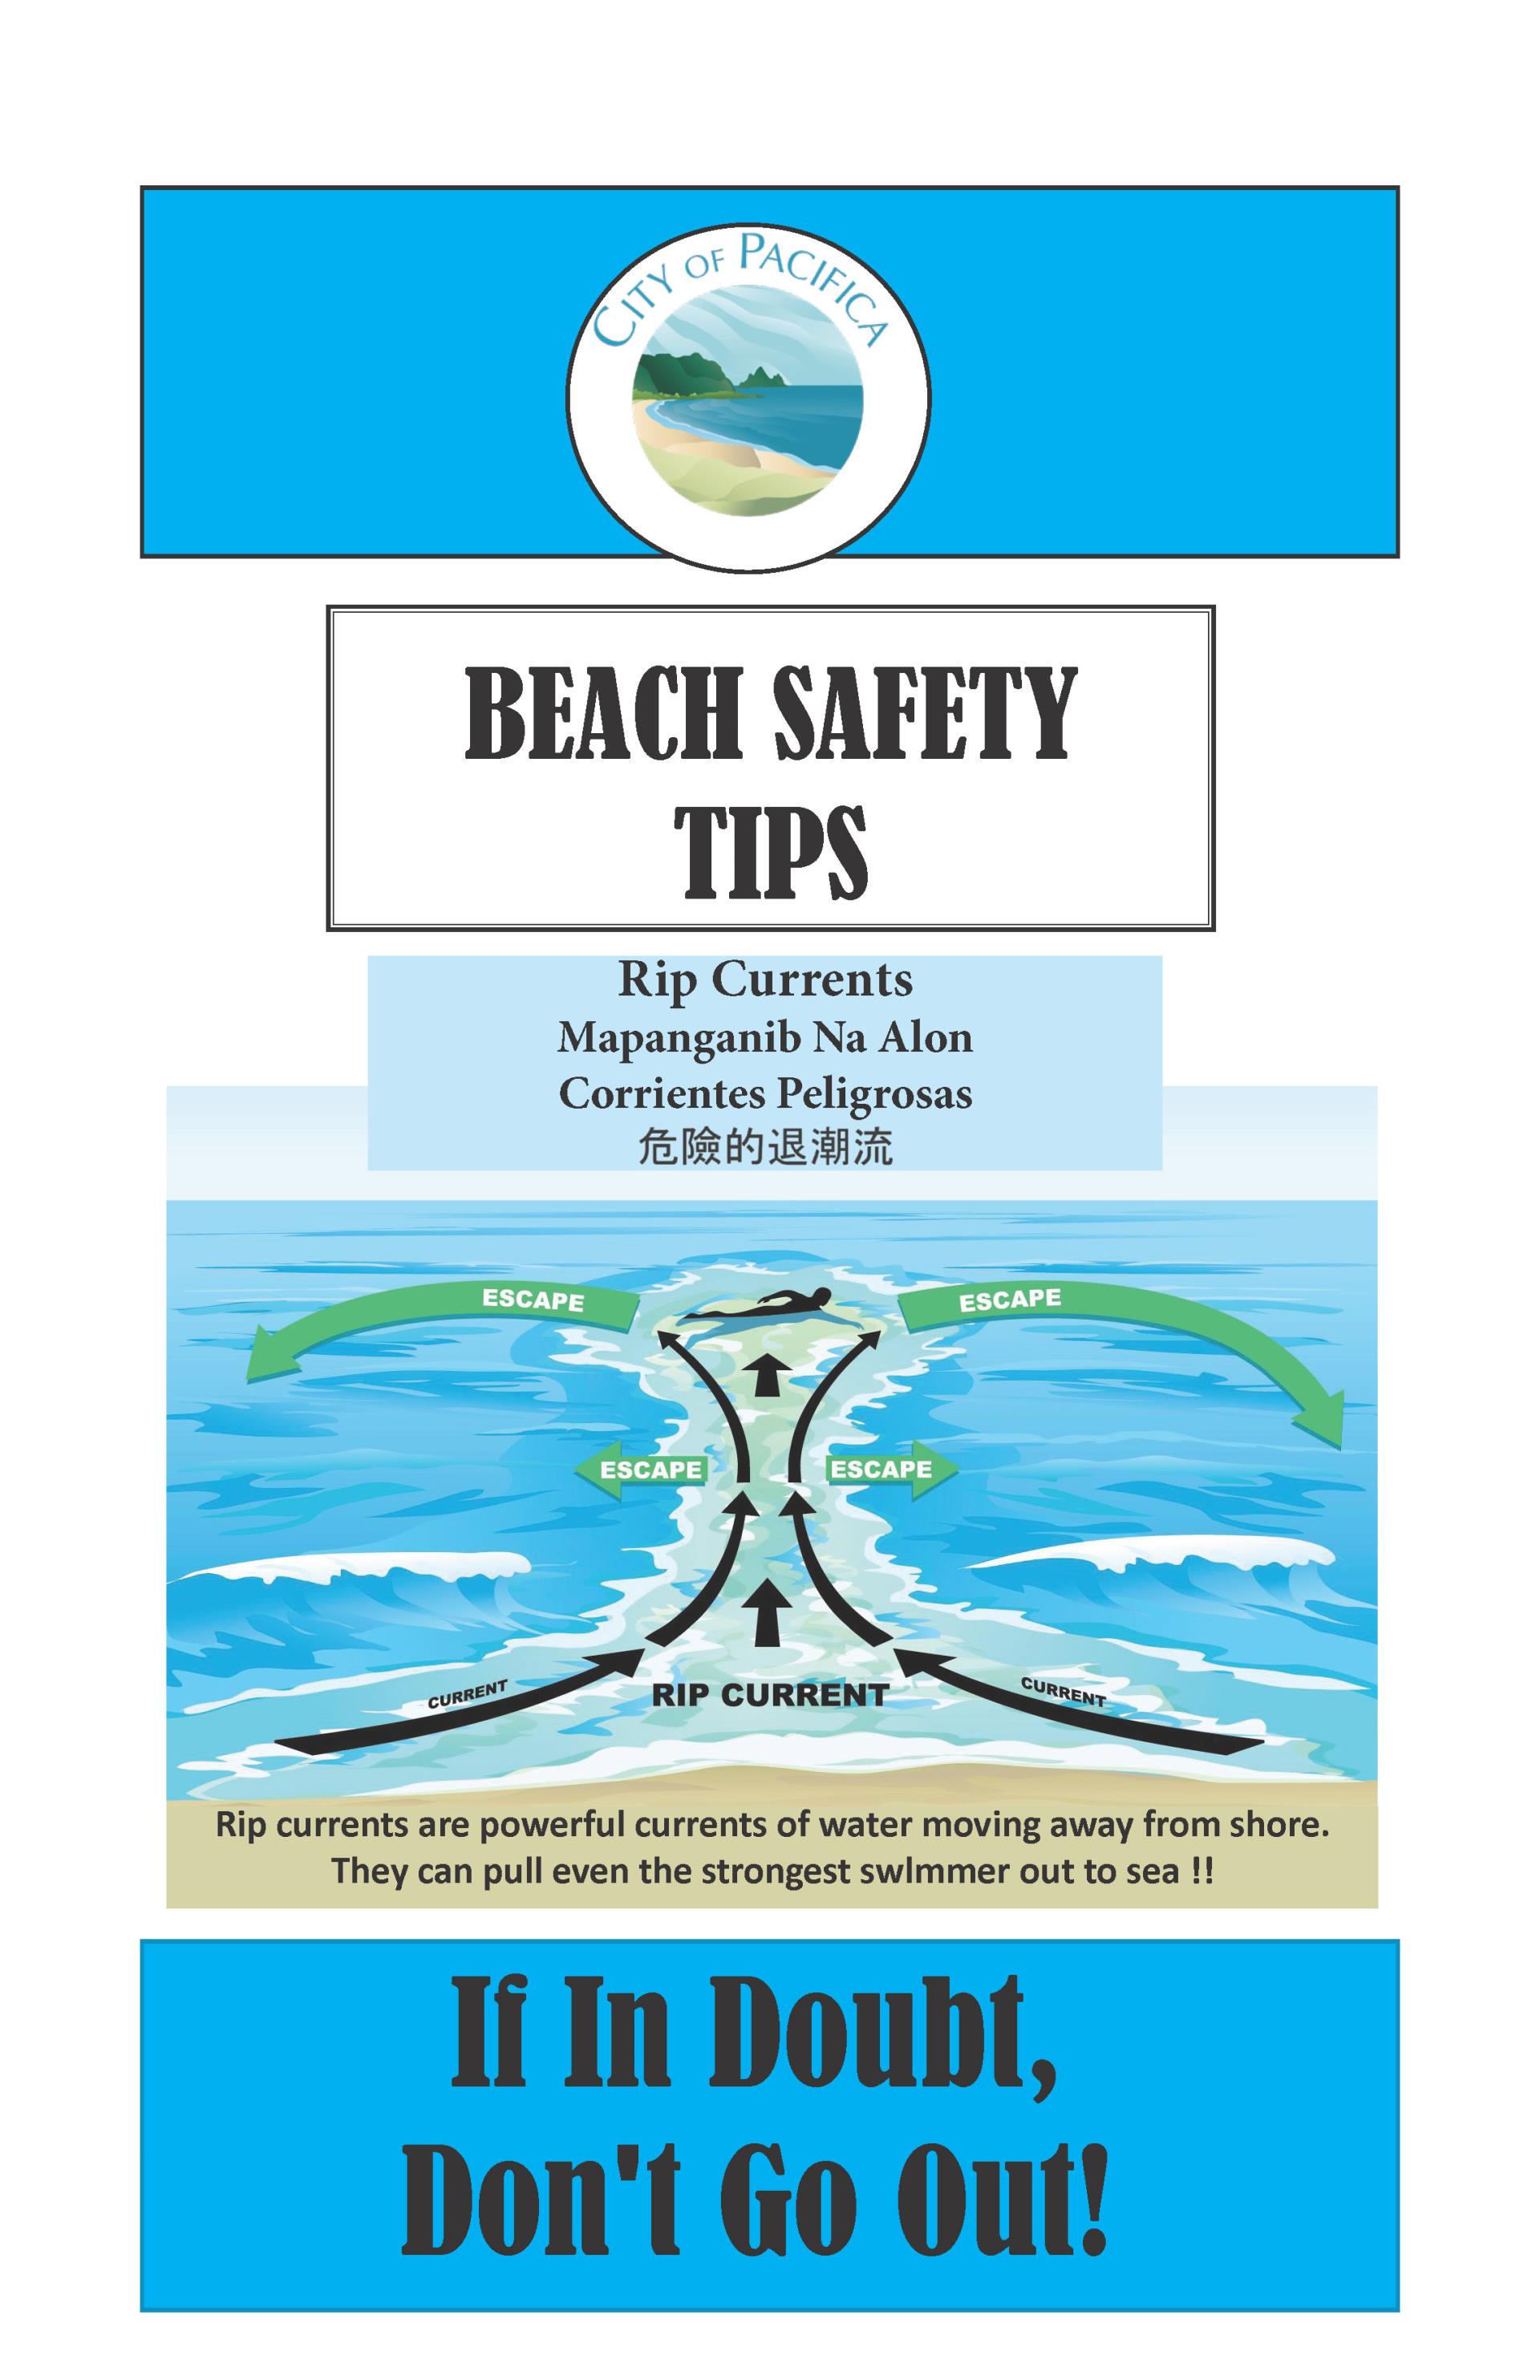 Beach Safety Tips Flyer